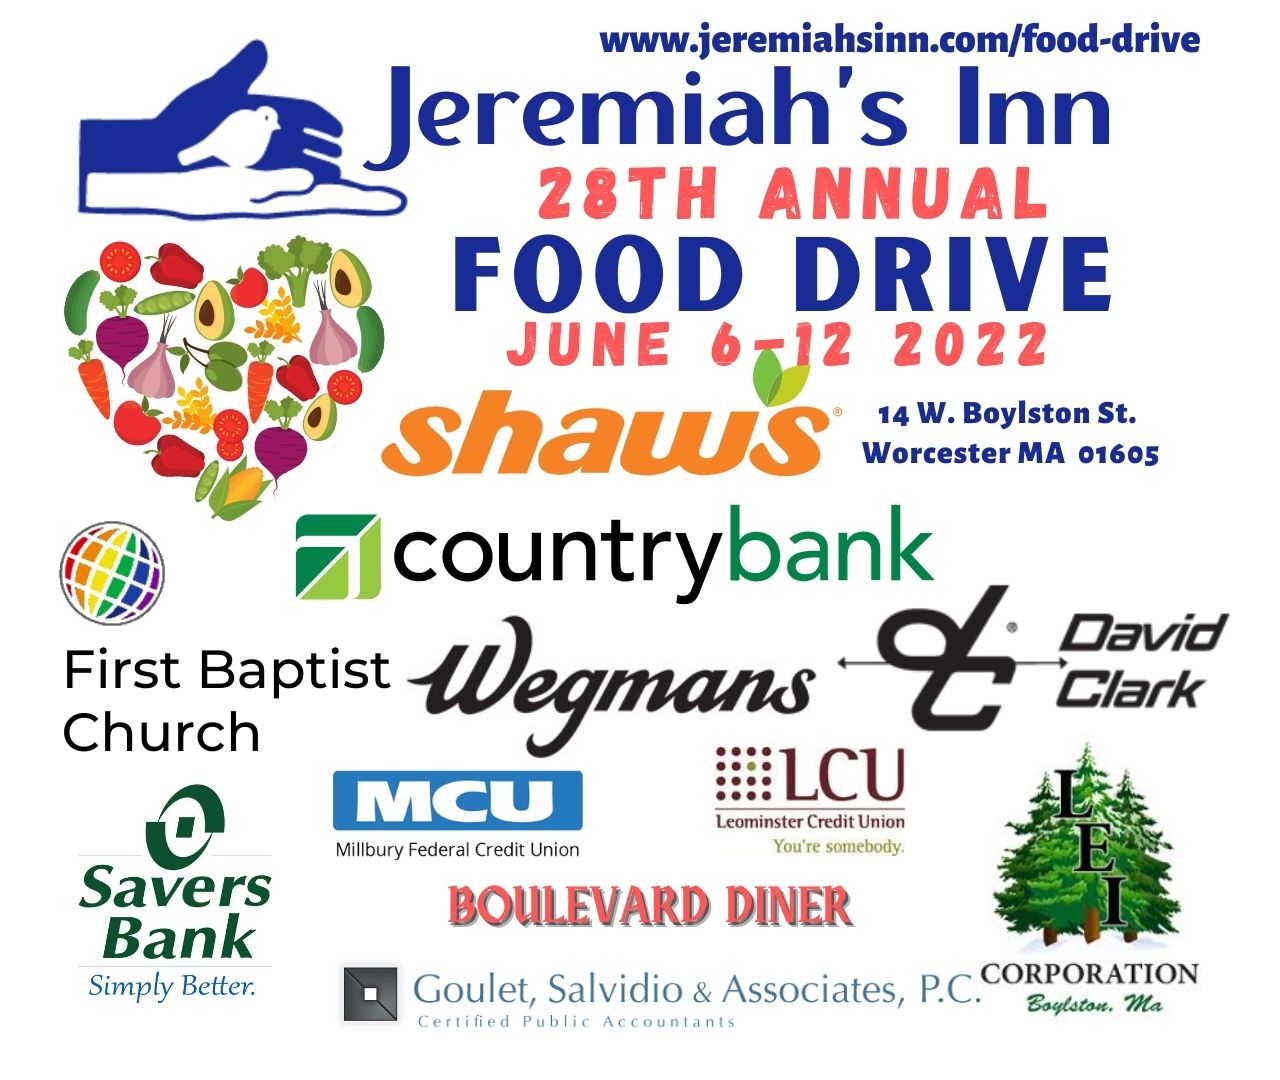 Jeremiah's Inn - 2020